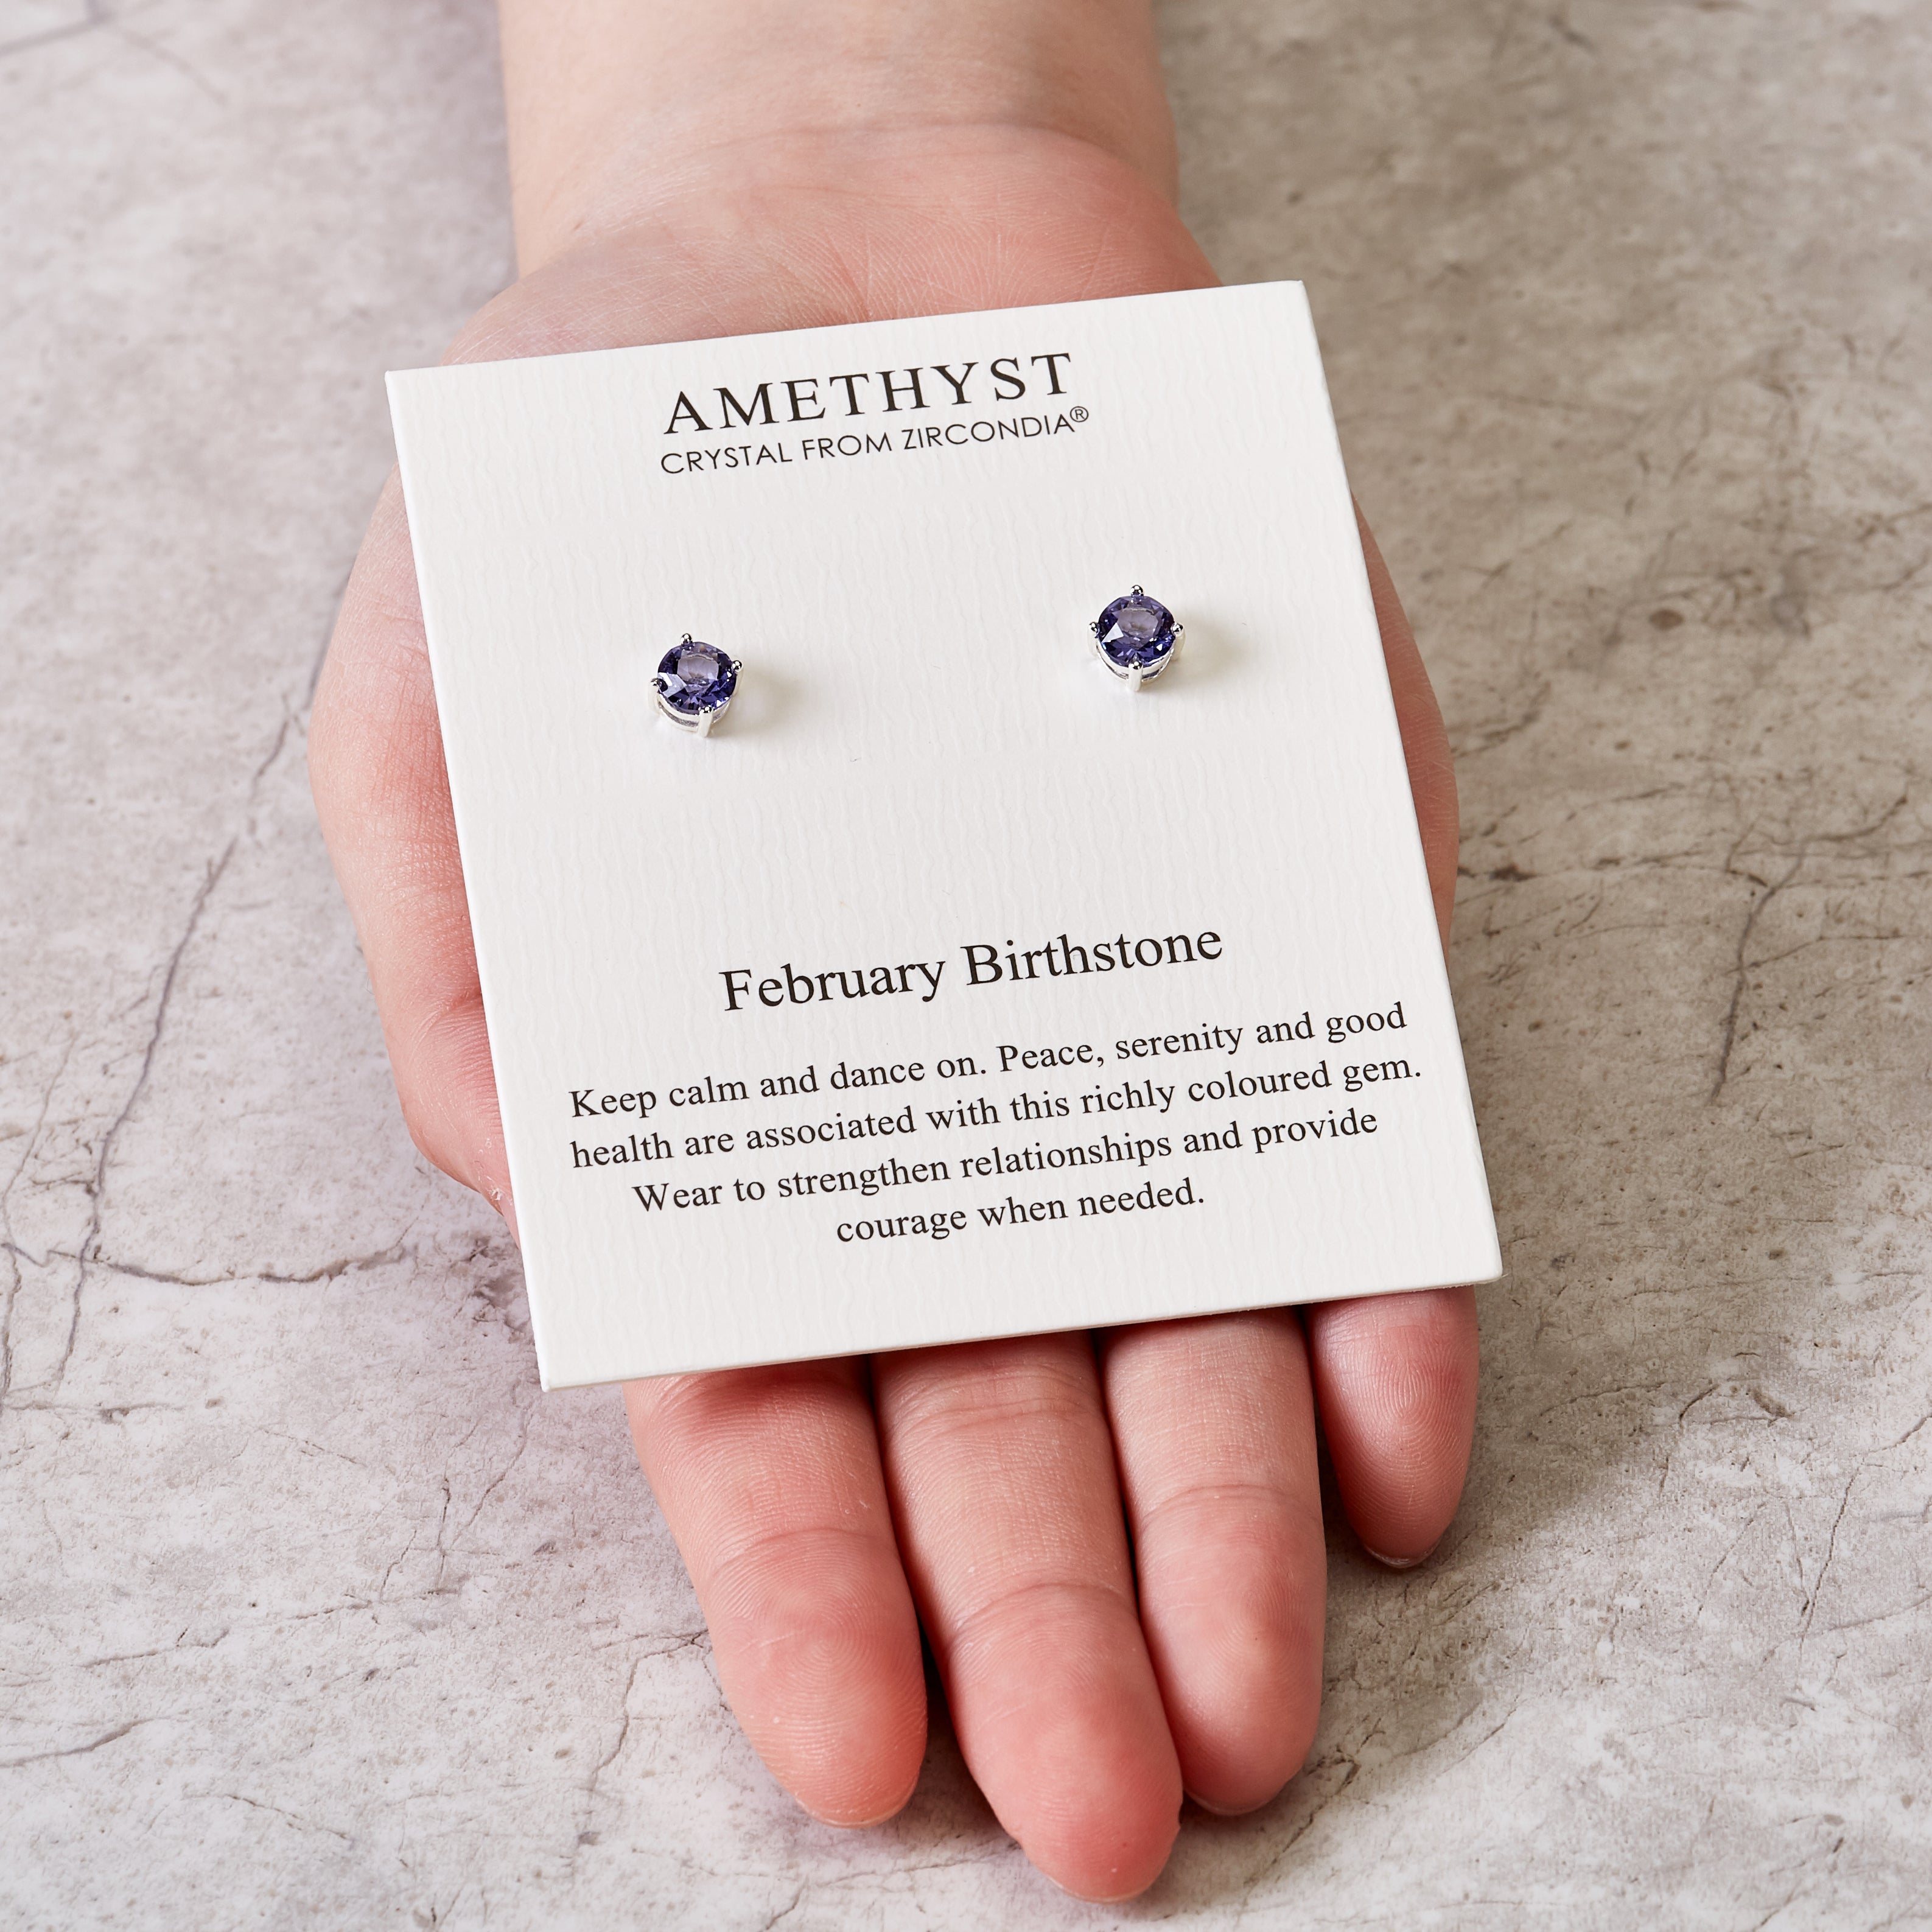 February (Amethyst) Birthstone Earrings Created with Zircondia® Crystals